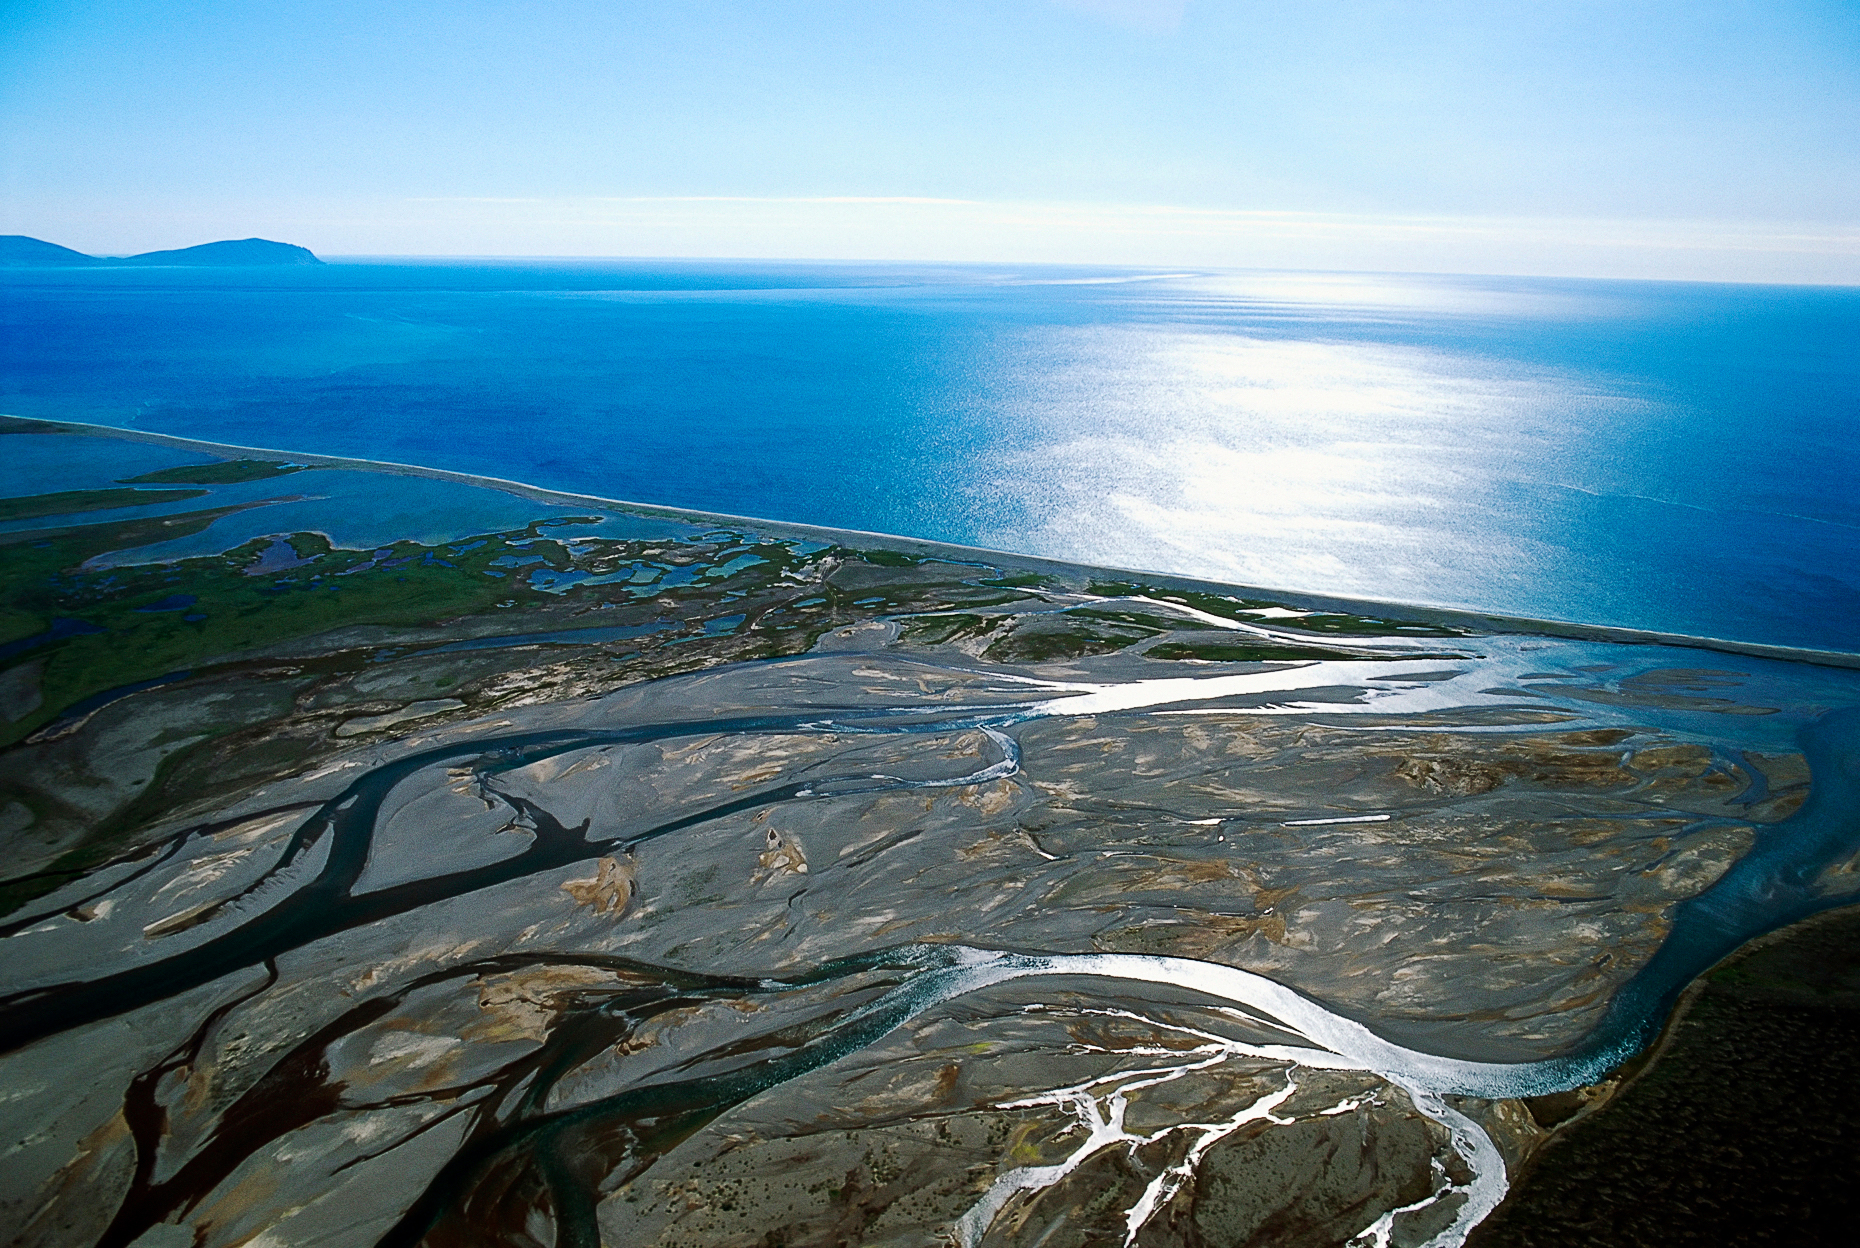 Aerial view of the Bering Sea between Provideniya and Egvekinot,